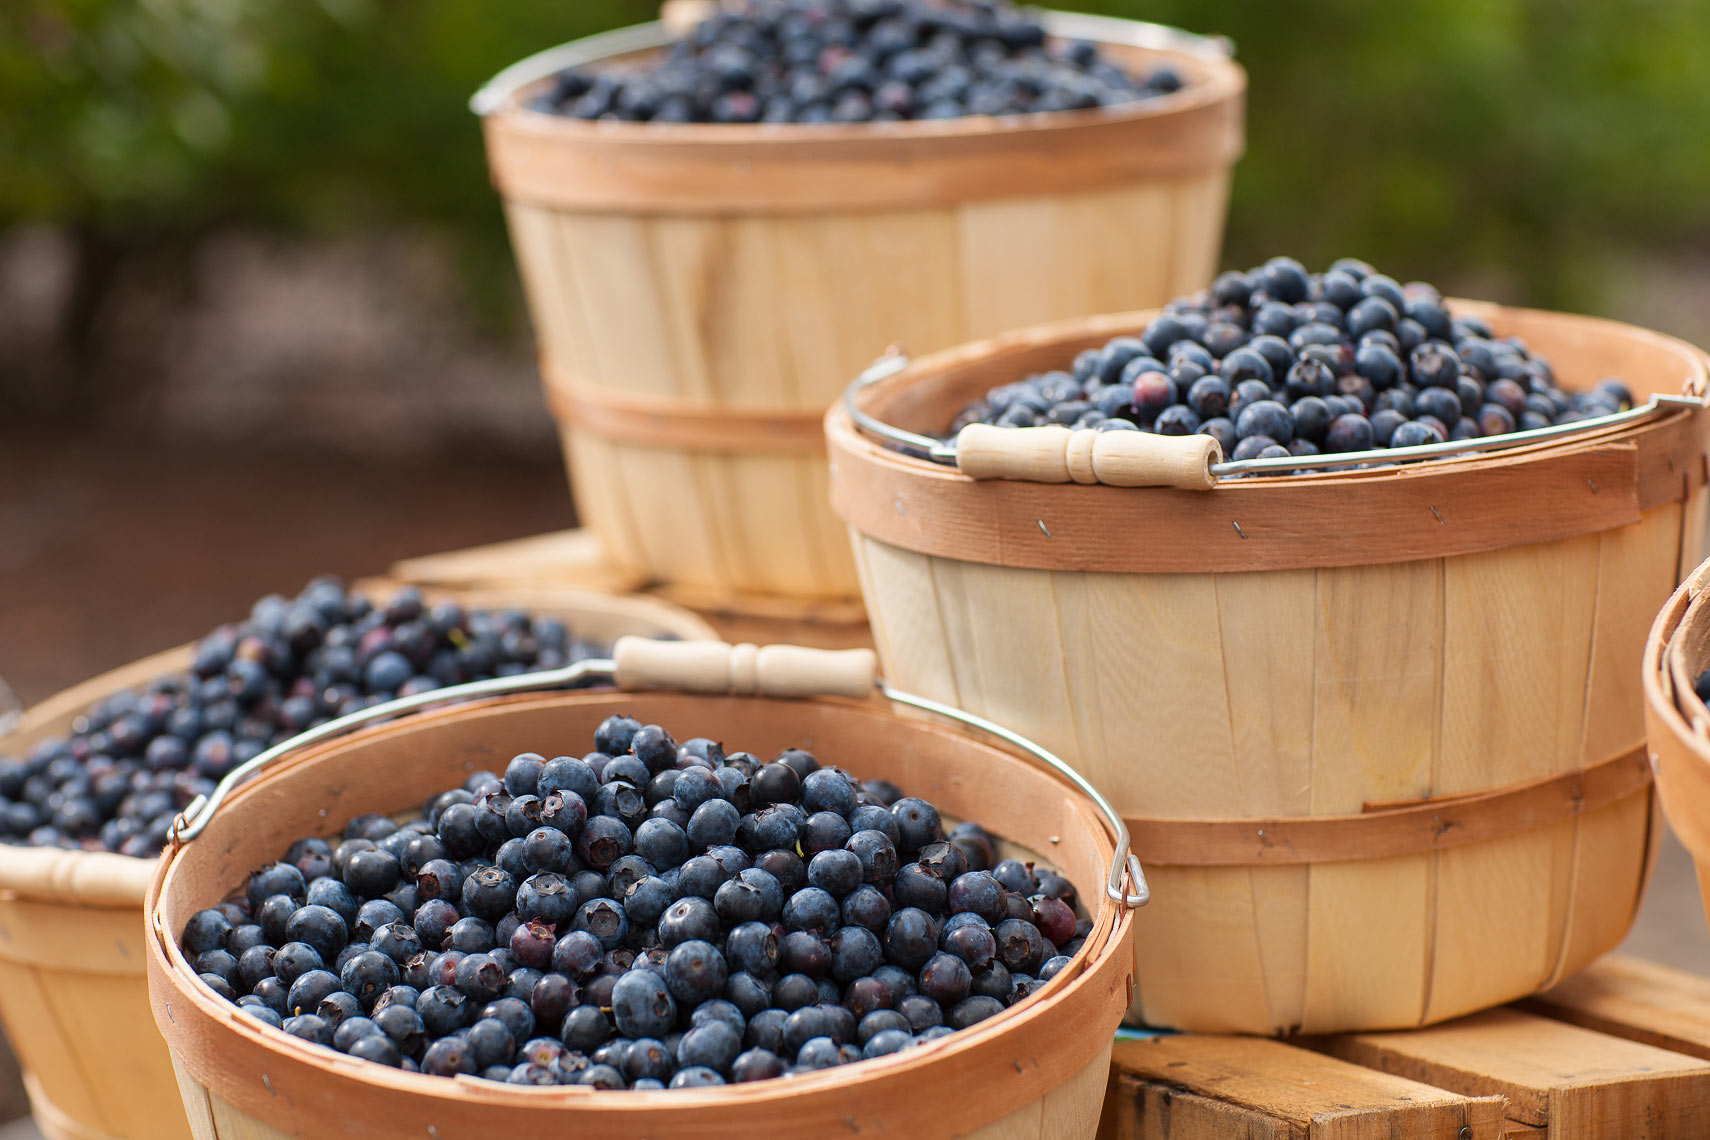 heb-blueberries-produce-department-jason-risner-photography-8680